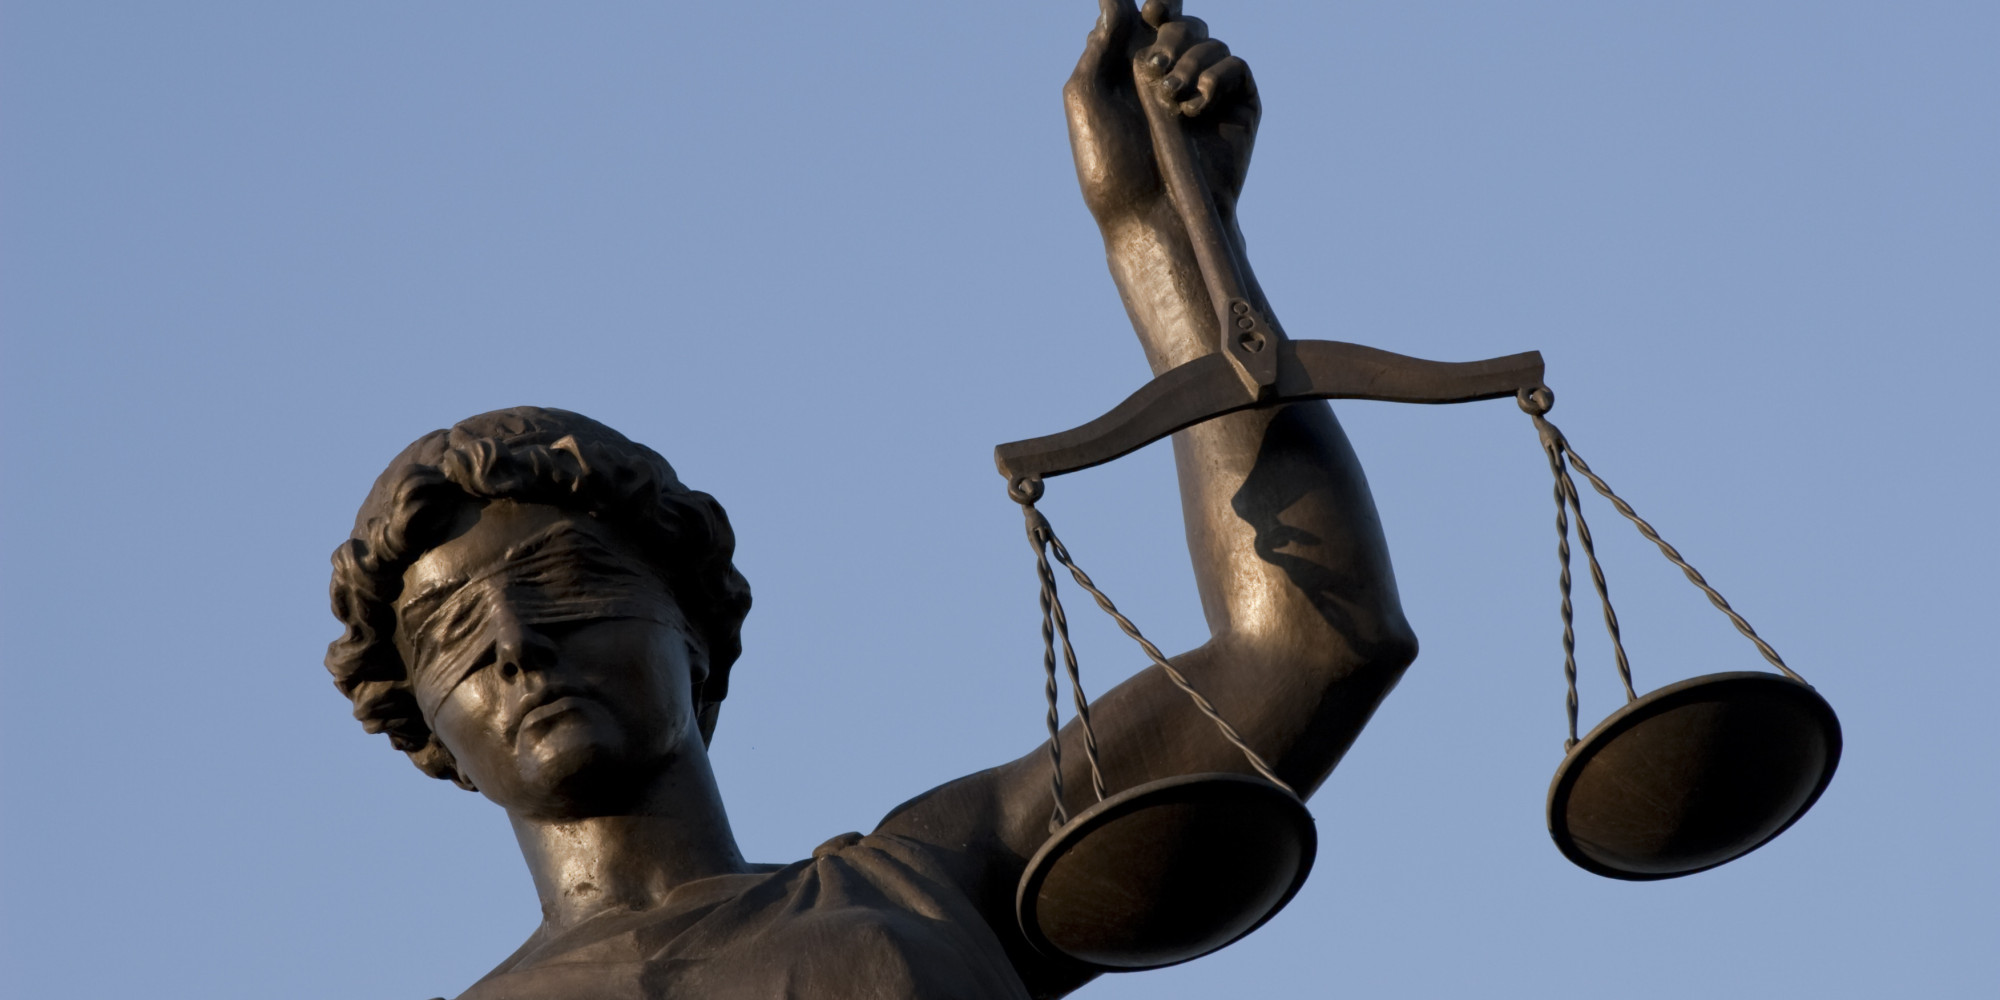 Poder Judicial: "Que no haya ganadores ni perdedores anticipados"